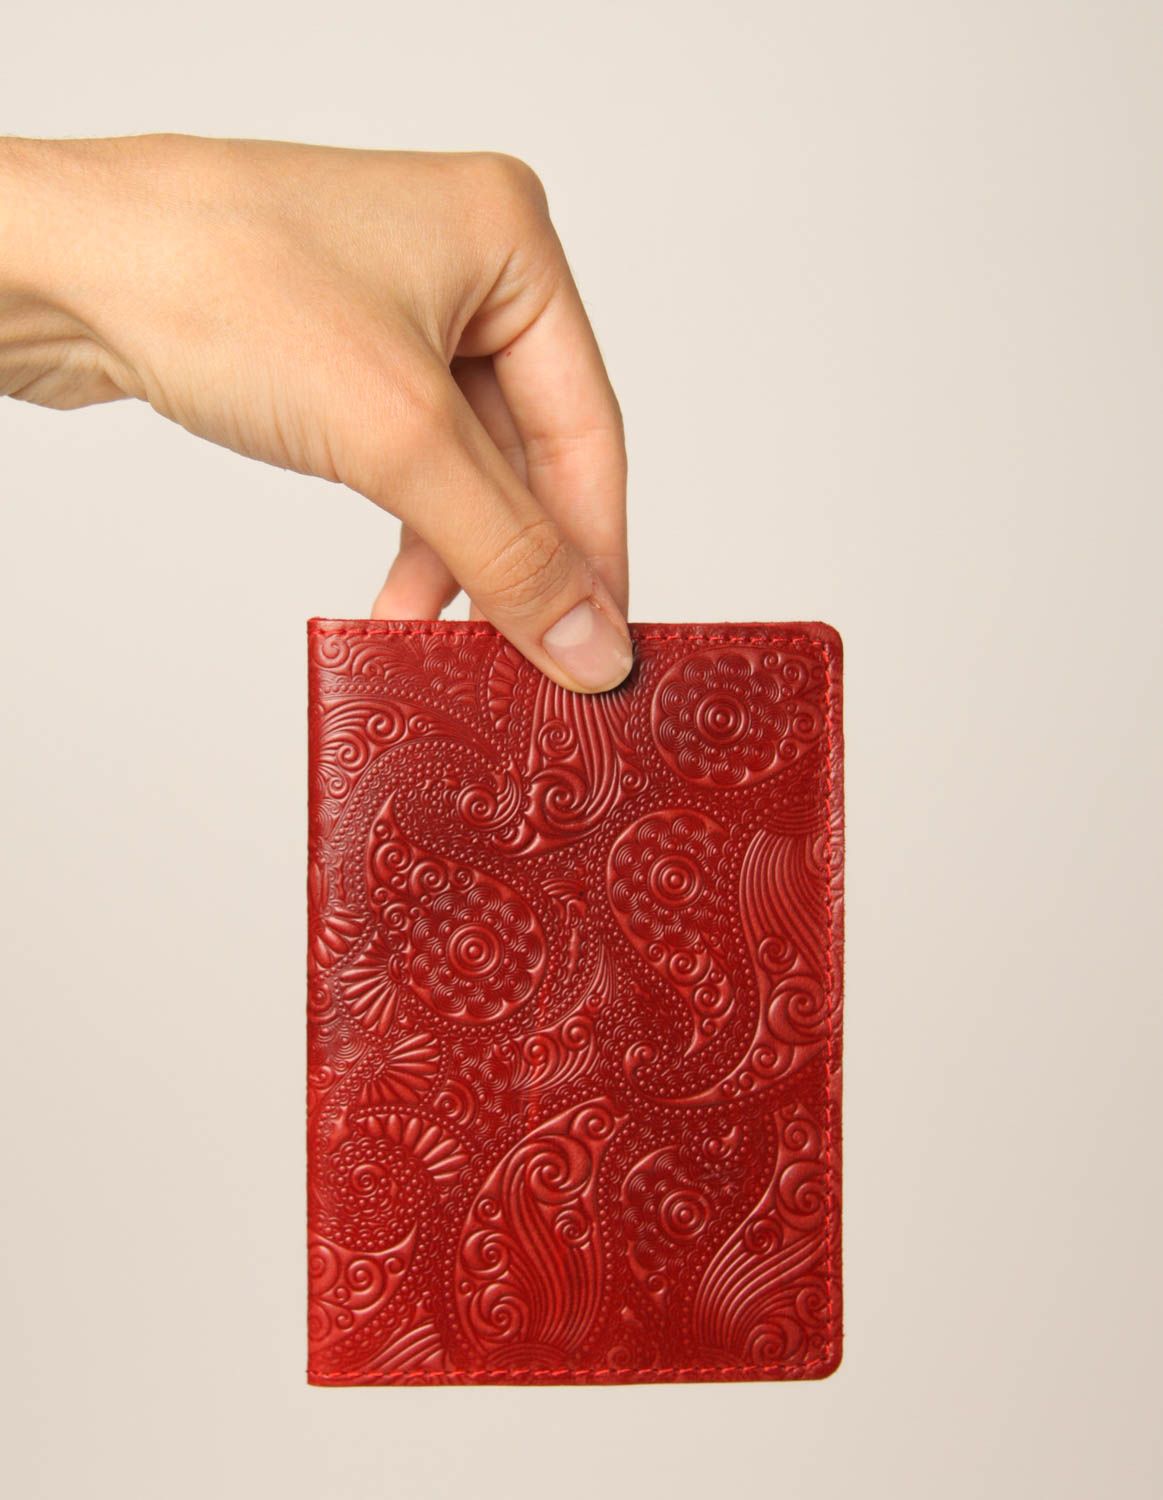 Unusual handmade passport cover handmade accessories leather goods gift ideas photo 2